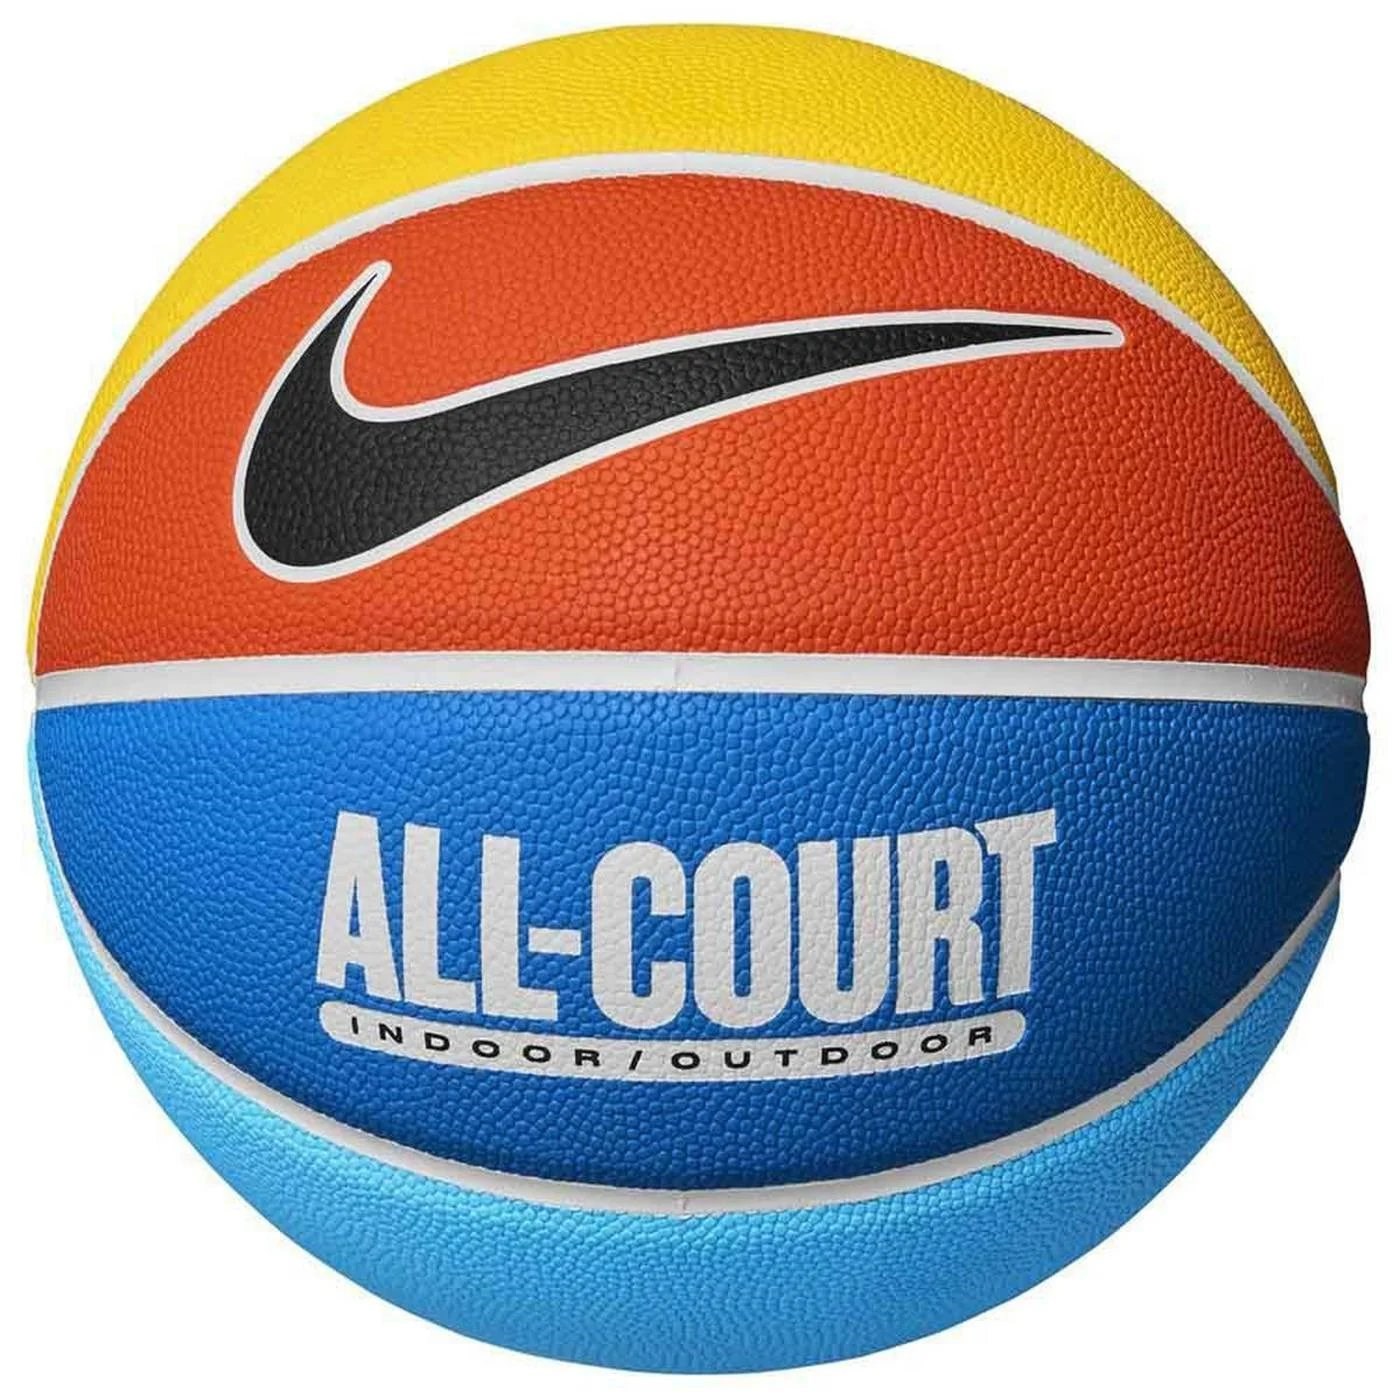 Nike Everyday All Court 8P Basketbol Topu Renkli